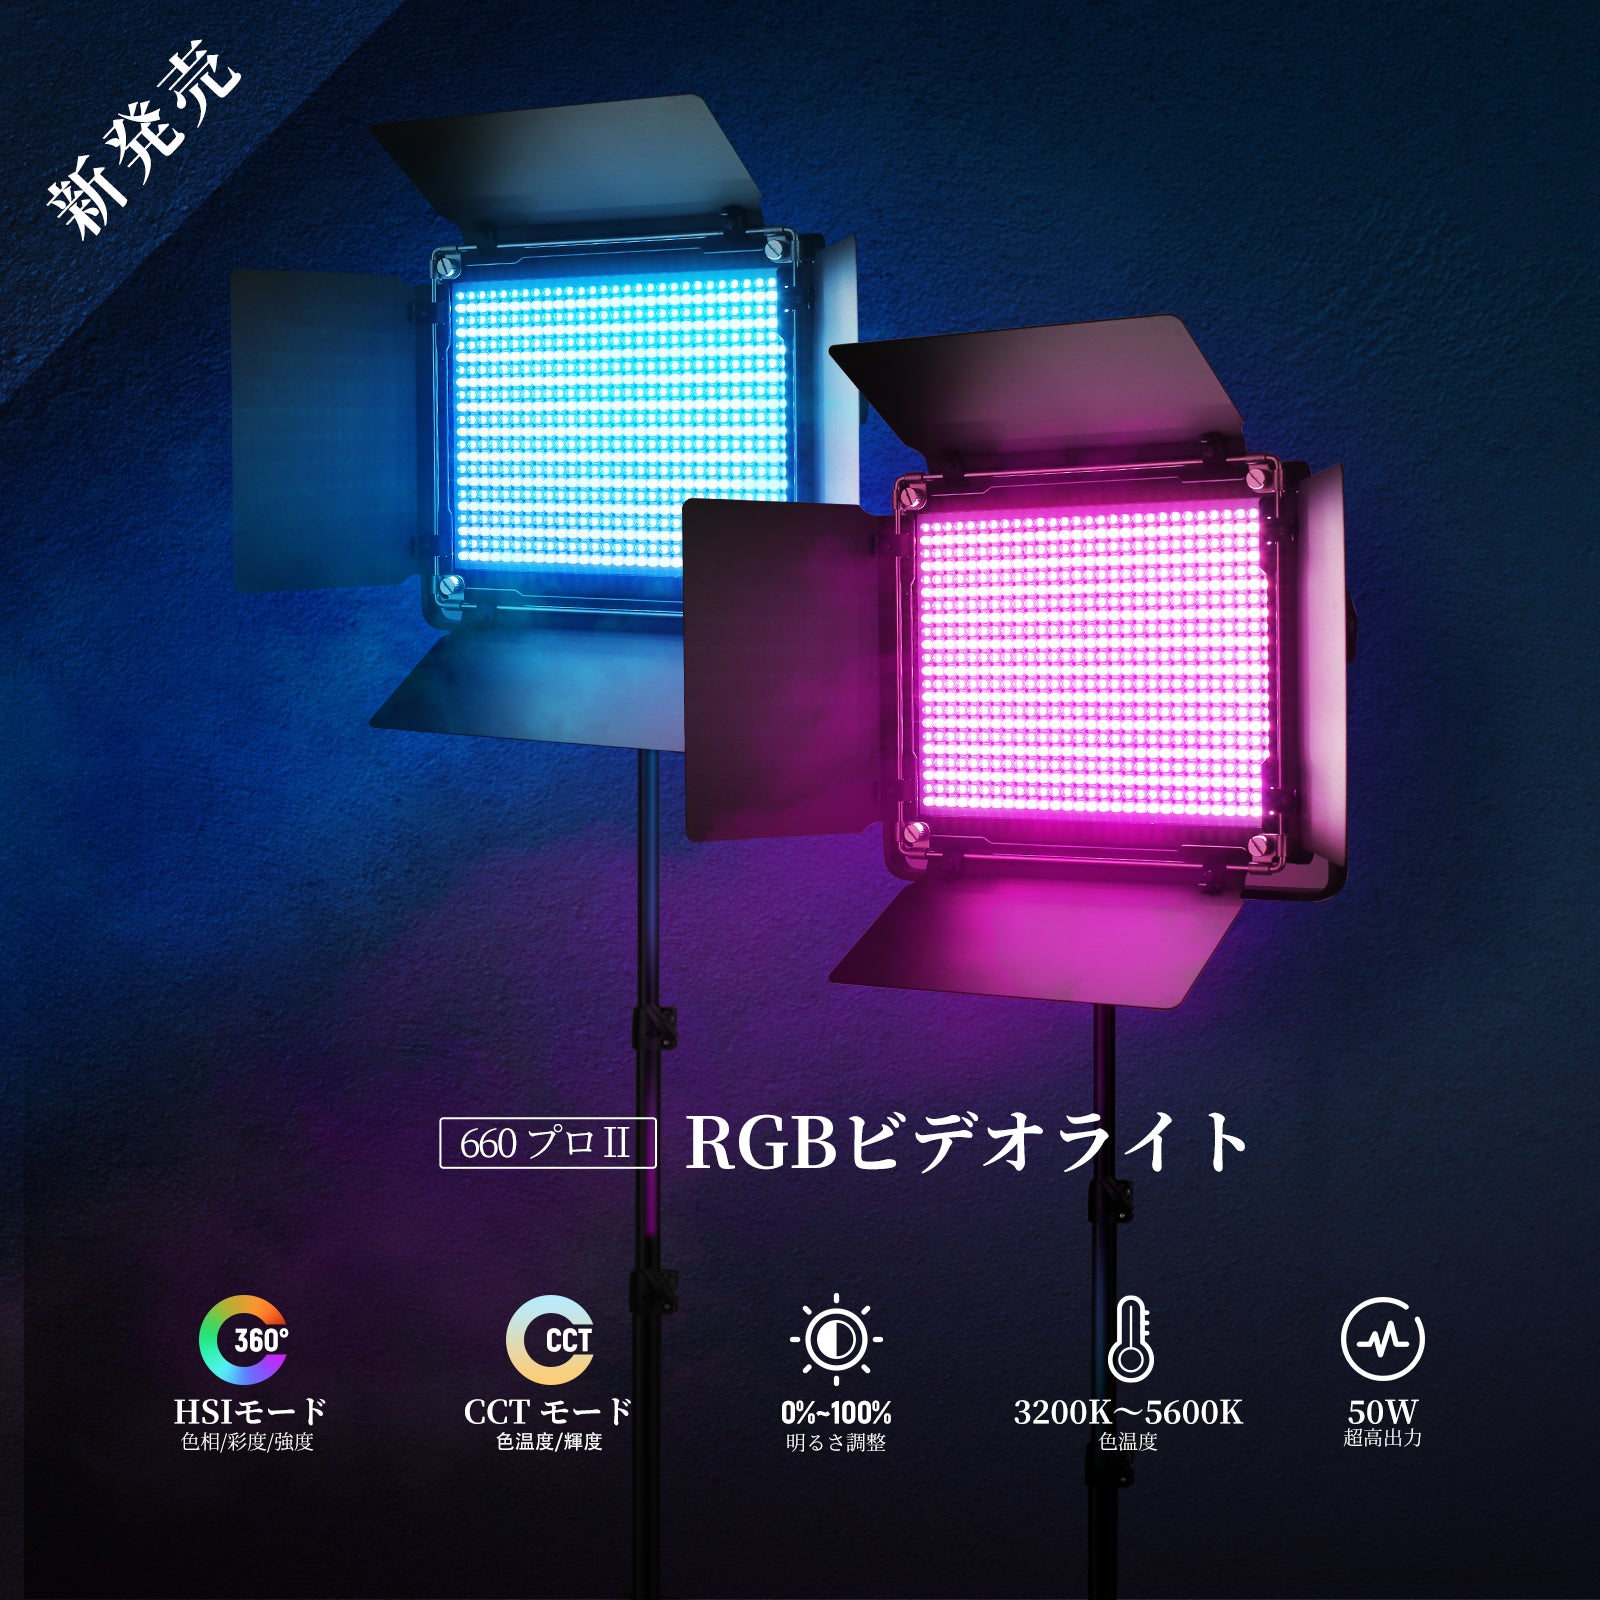 NEEWER アップグレード版 660PRO II RGB LEDビデオライト